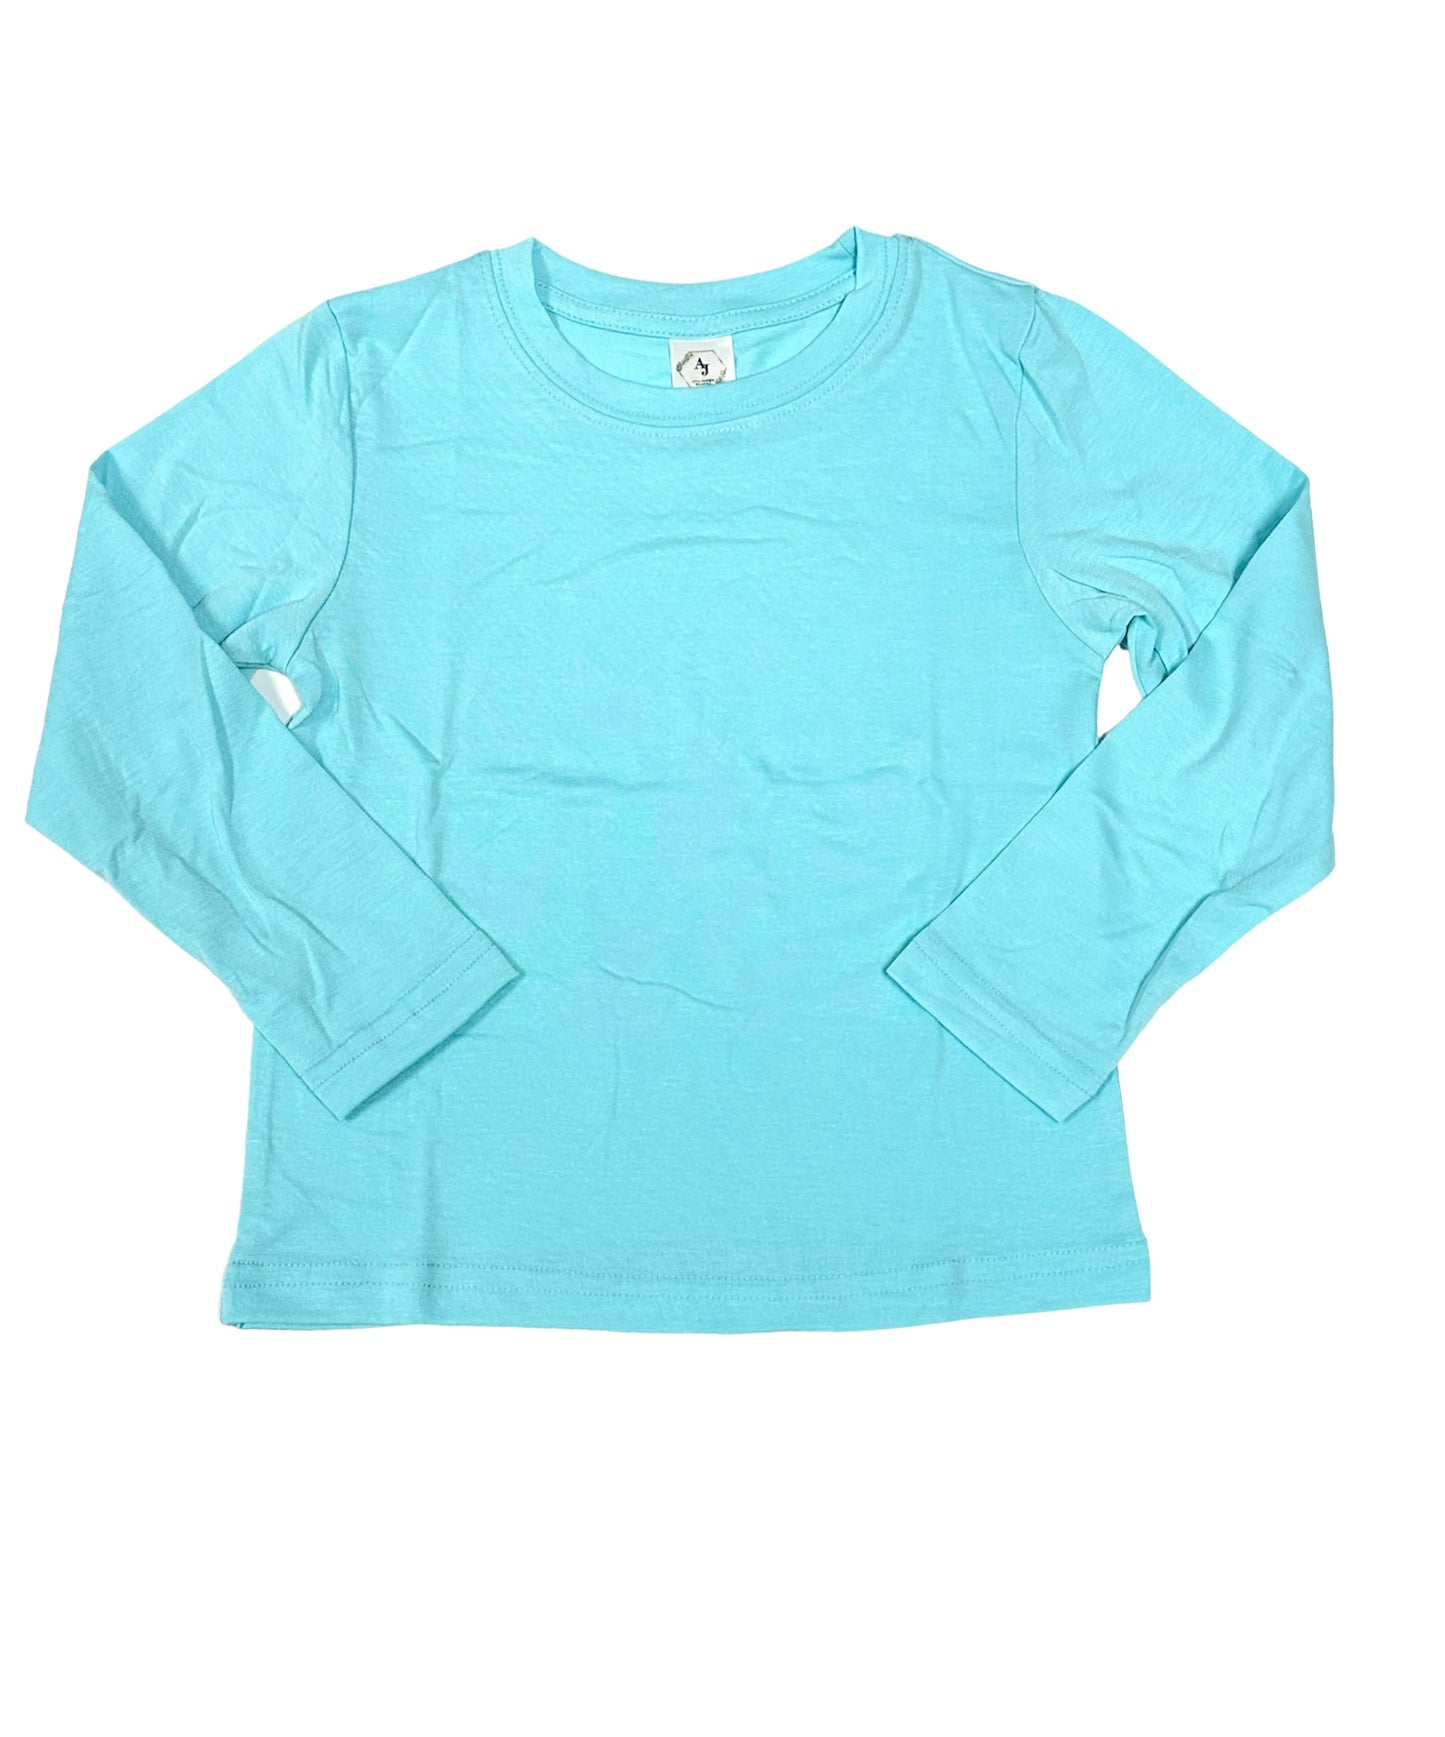 Kids Long Sleeve Unisex Shirt